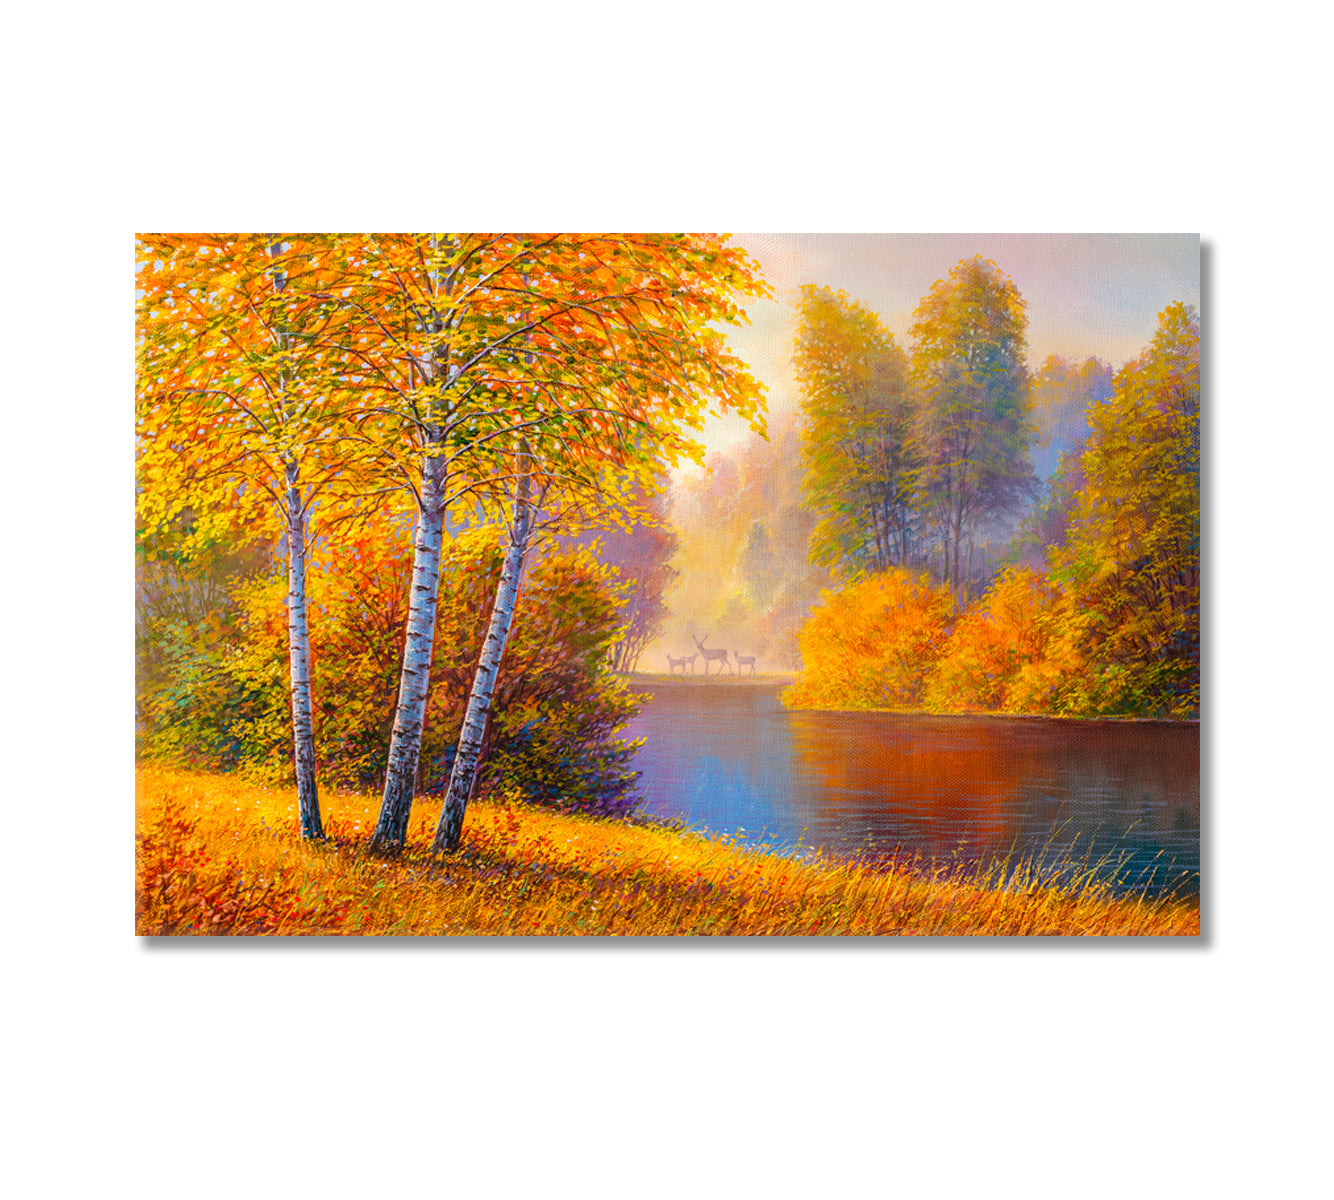 Bright Colorful Autumn Forest Canvas Print-Canvas Print-CetArt-1 Panel-24x16 inches-CetArt